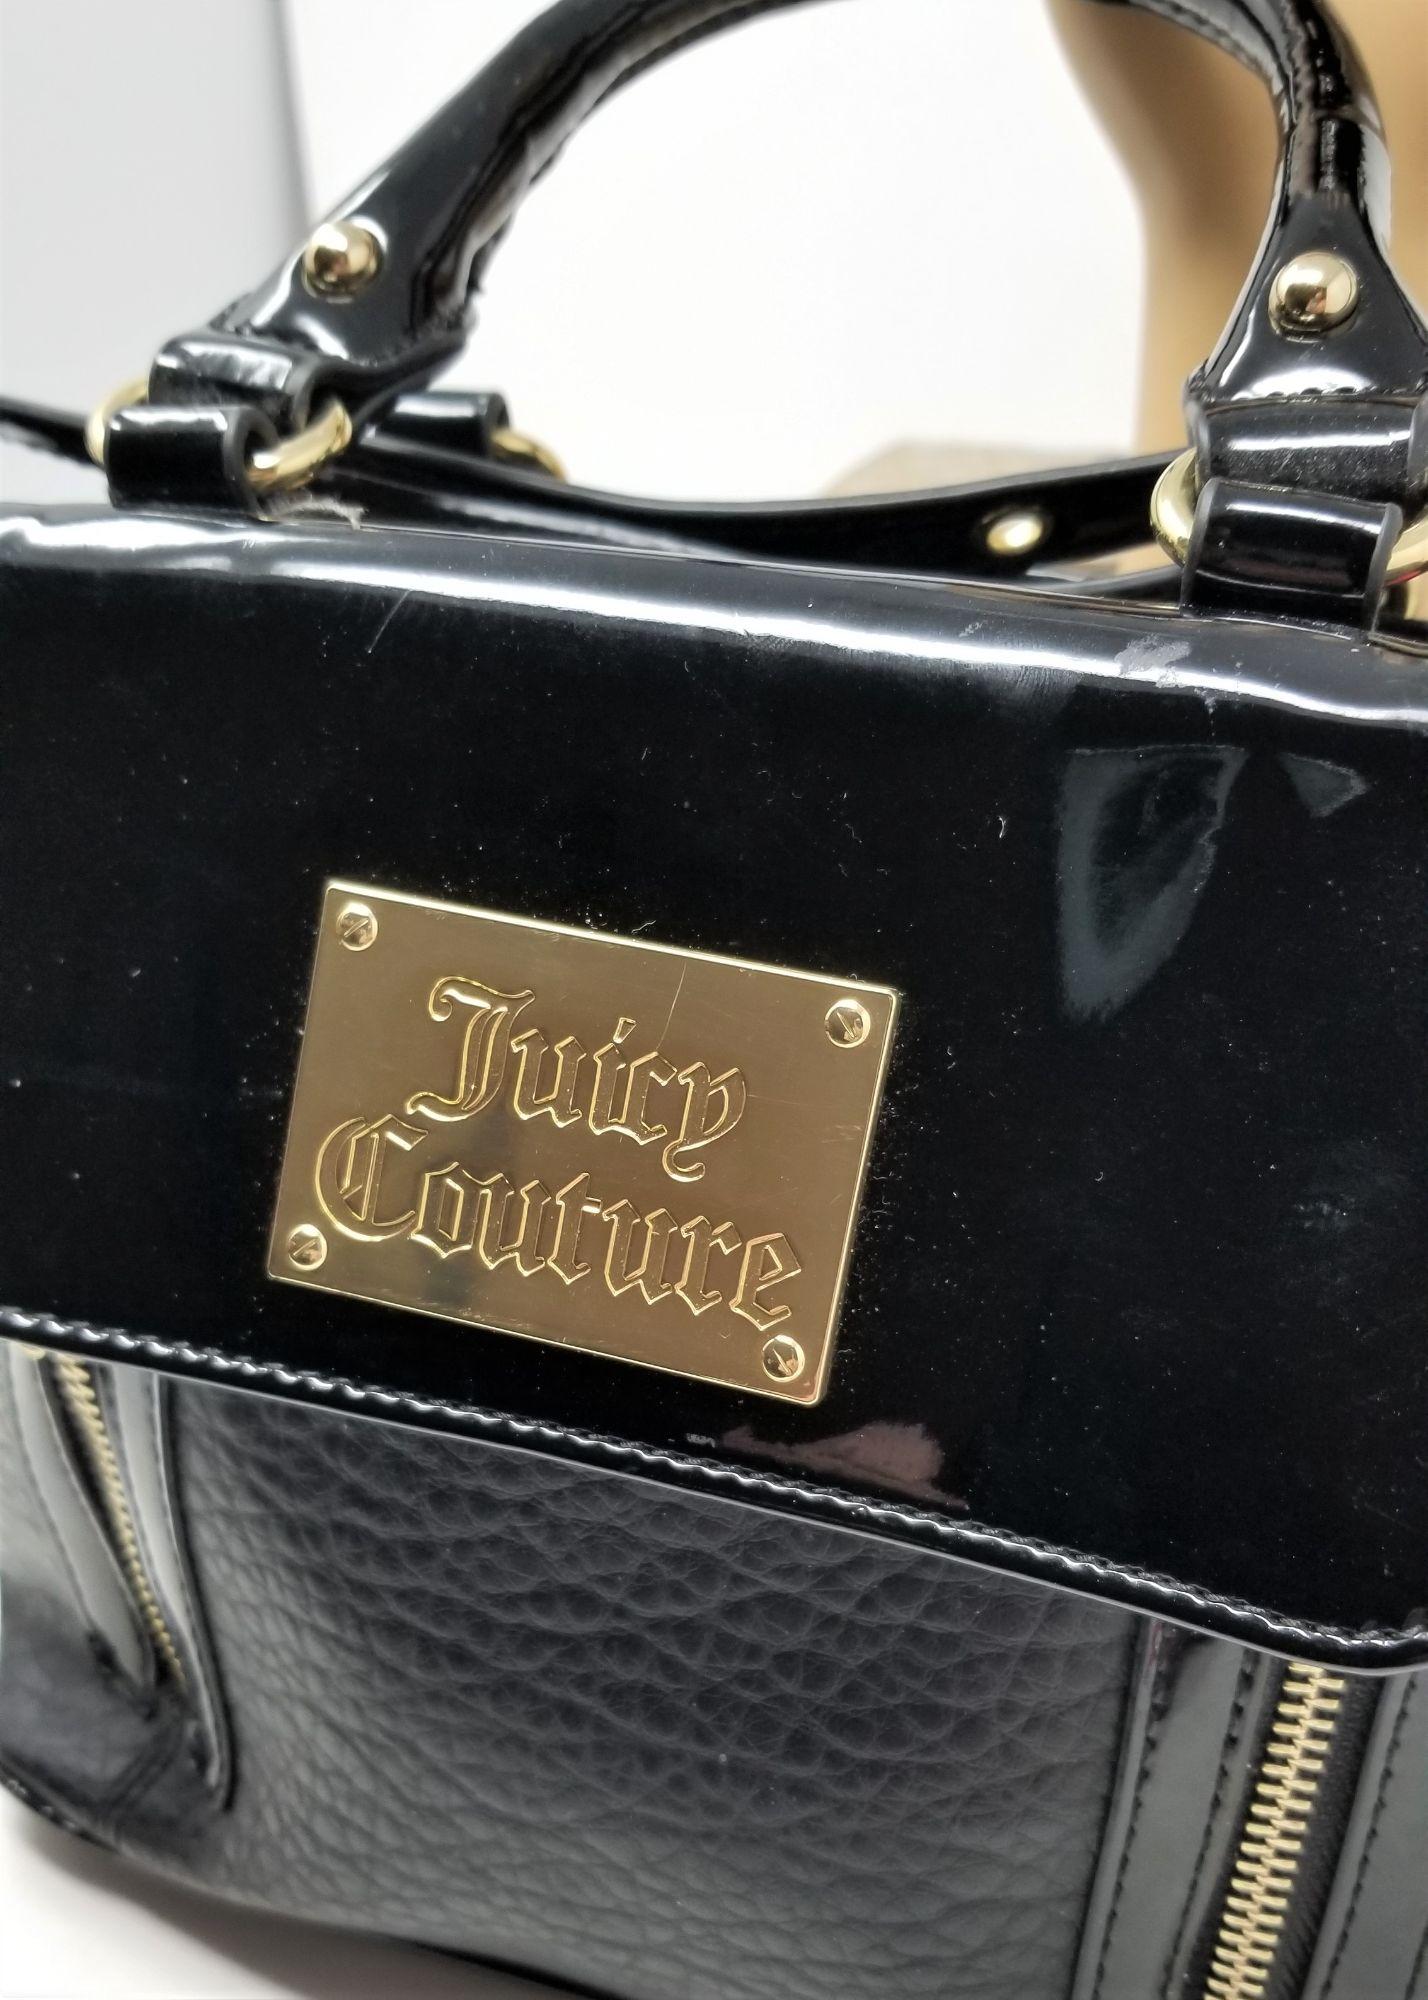 Juicy Couture Black Patent Leather Trim